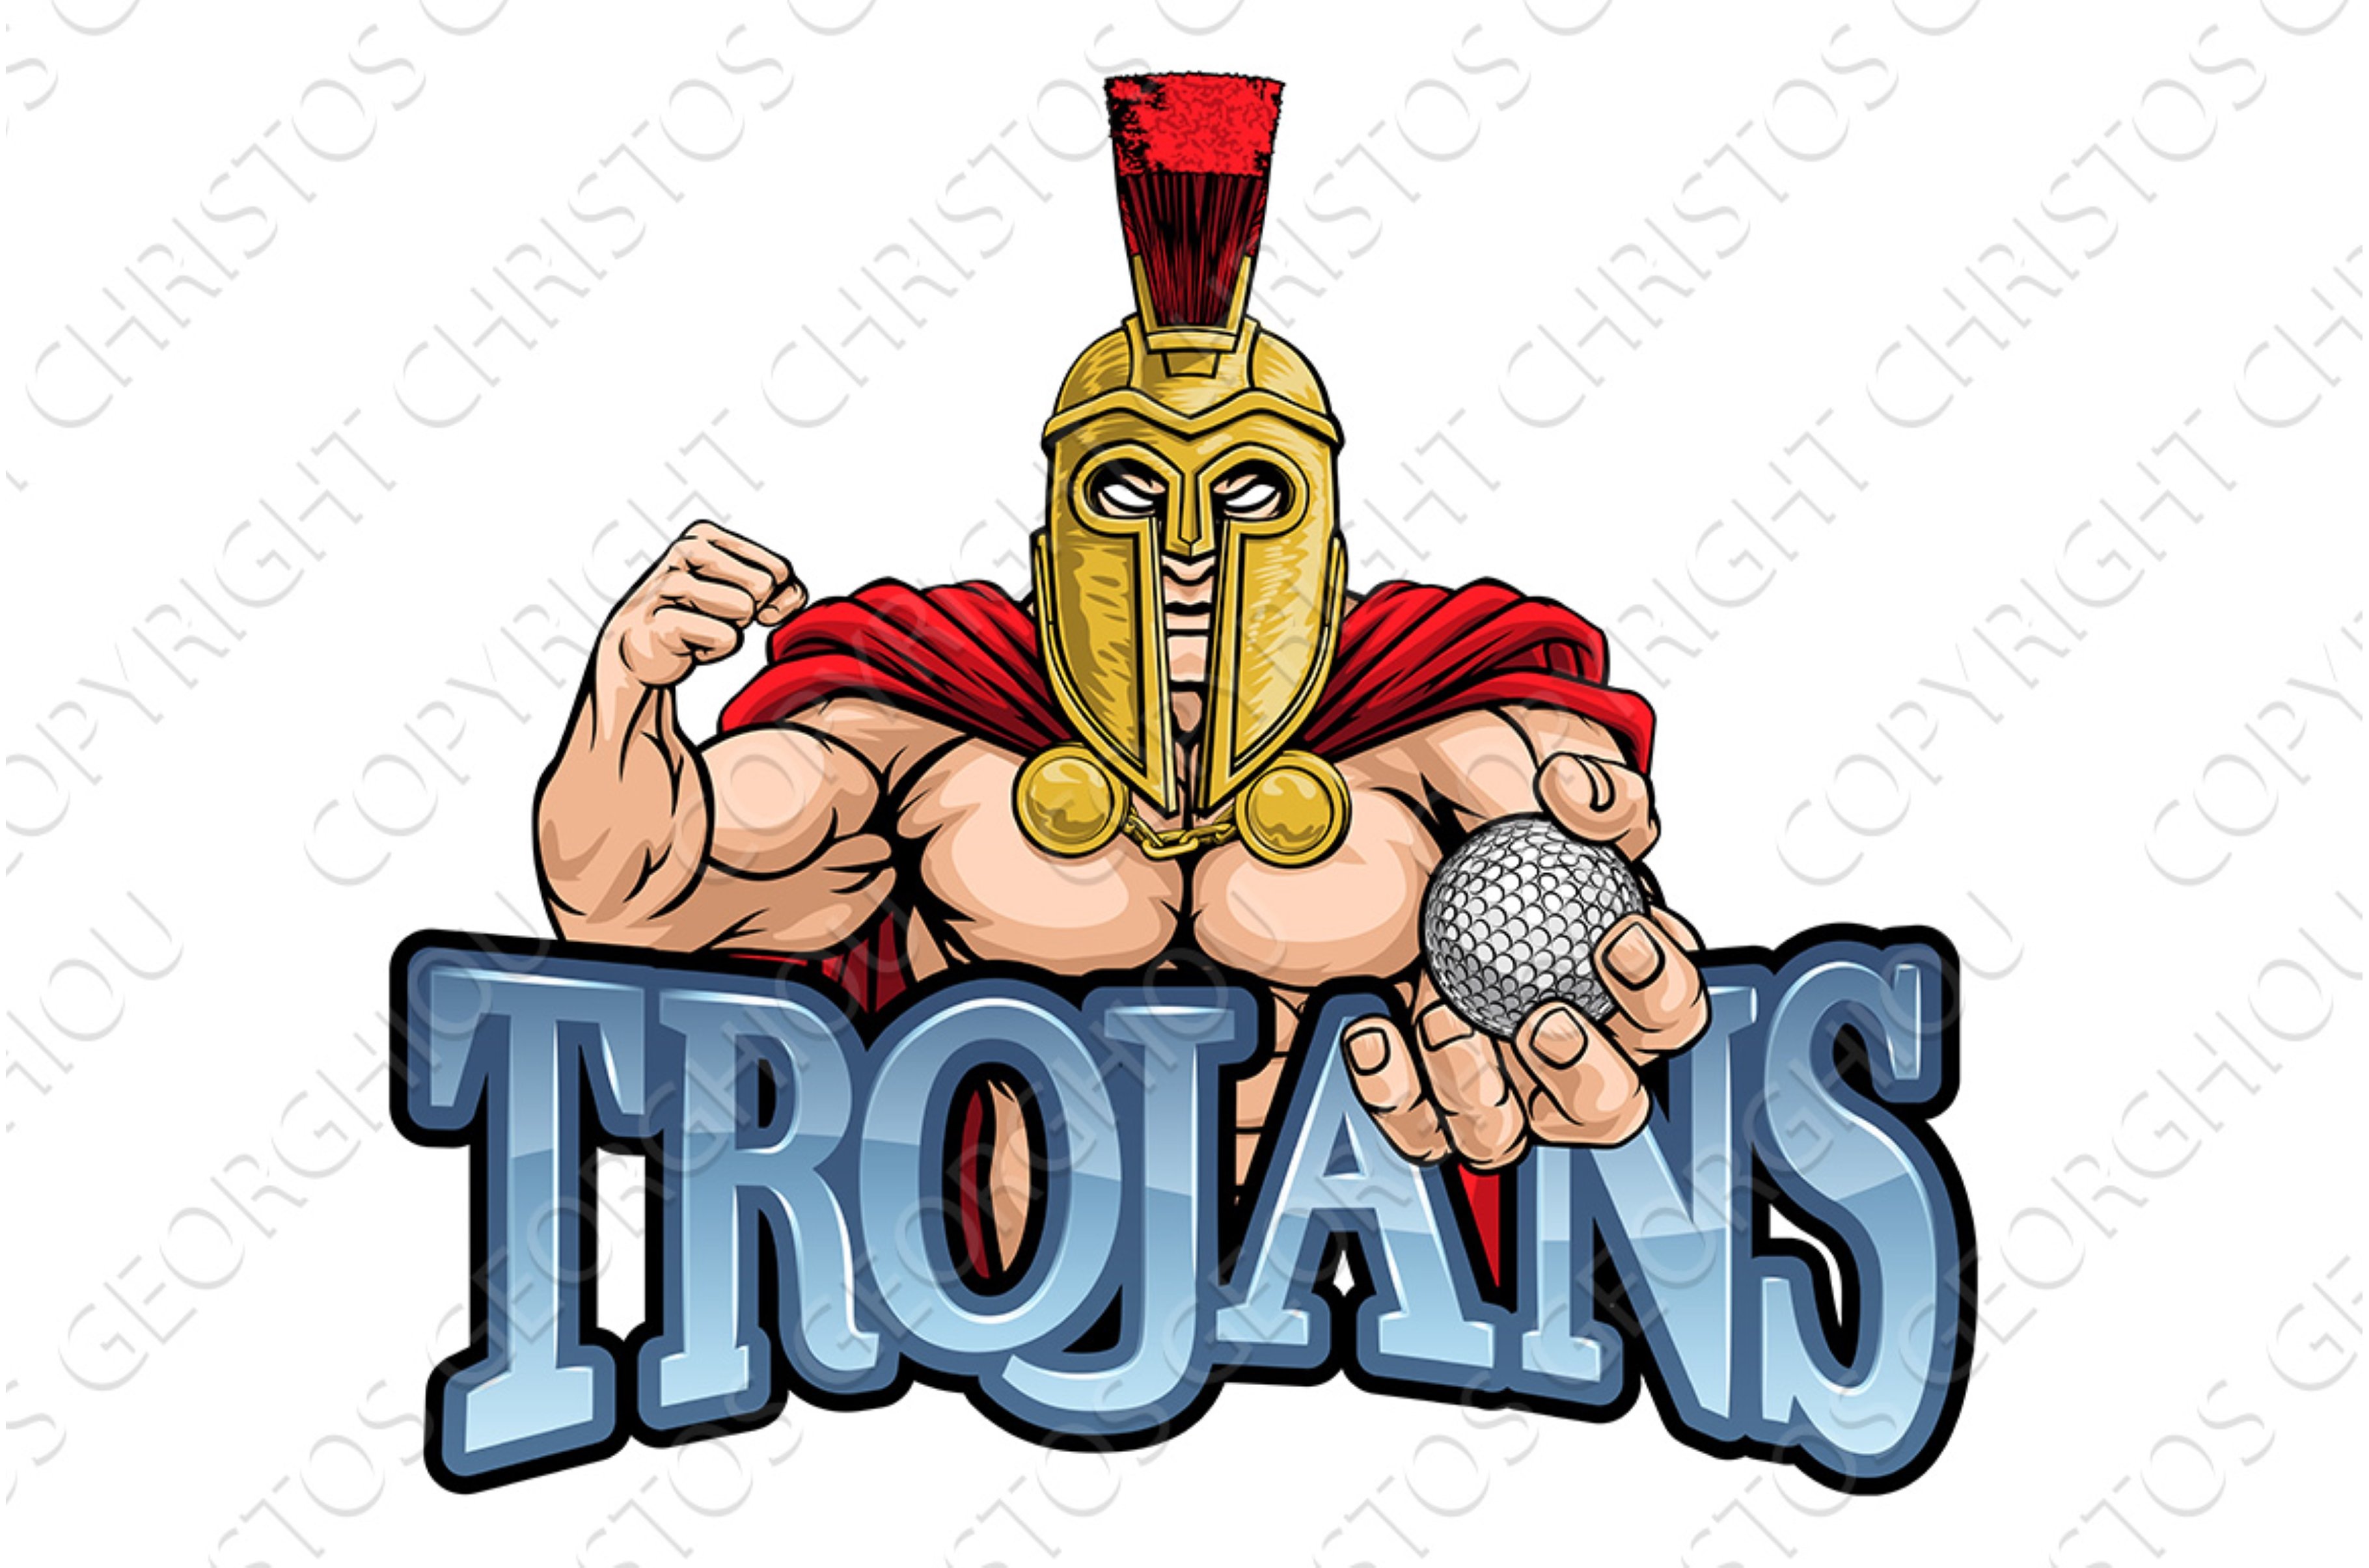 Trojan Spartan Golf Sports Mascot cover image.